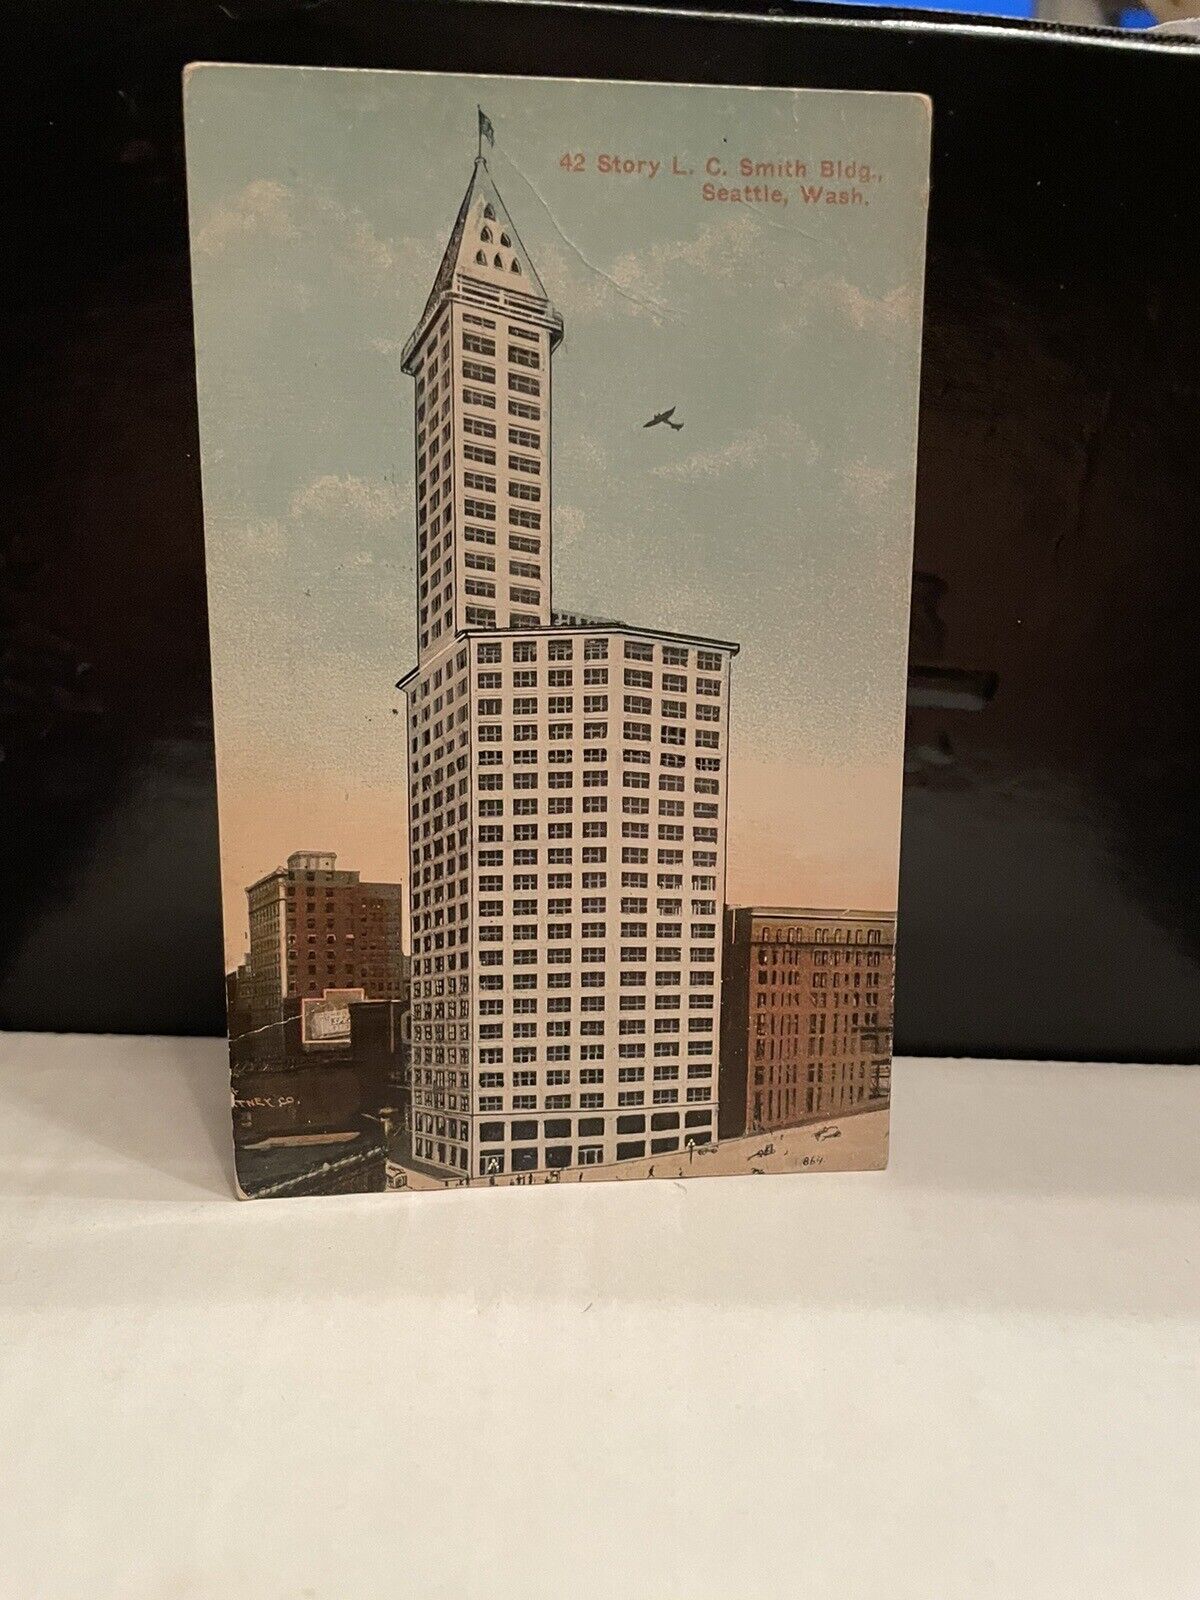 Seattle, Wash. Antique Post Card, Ref# 2529